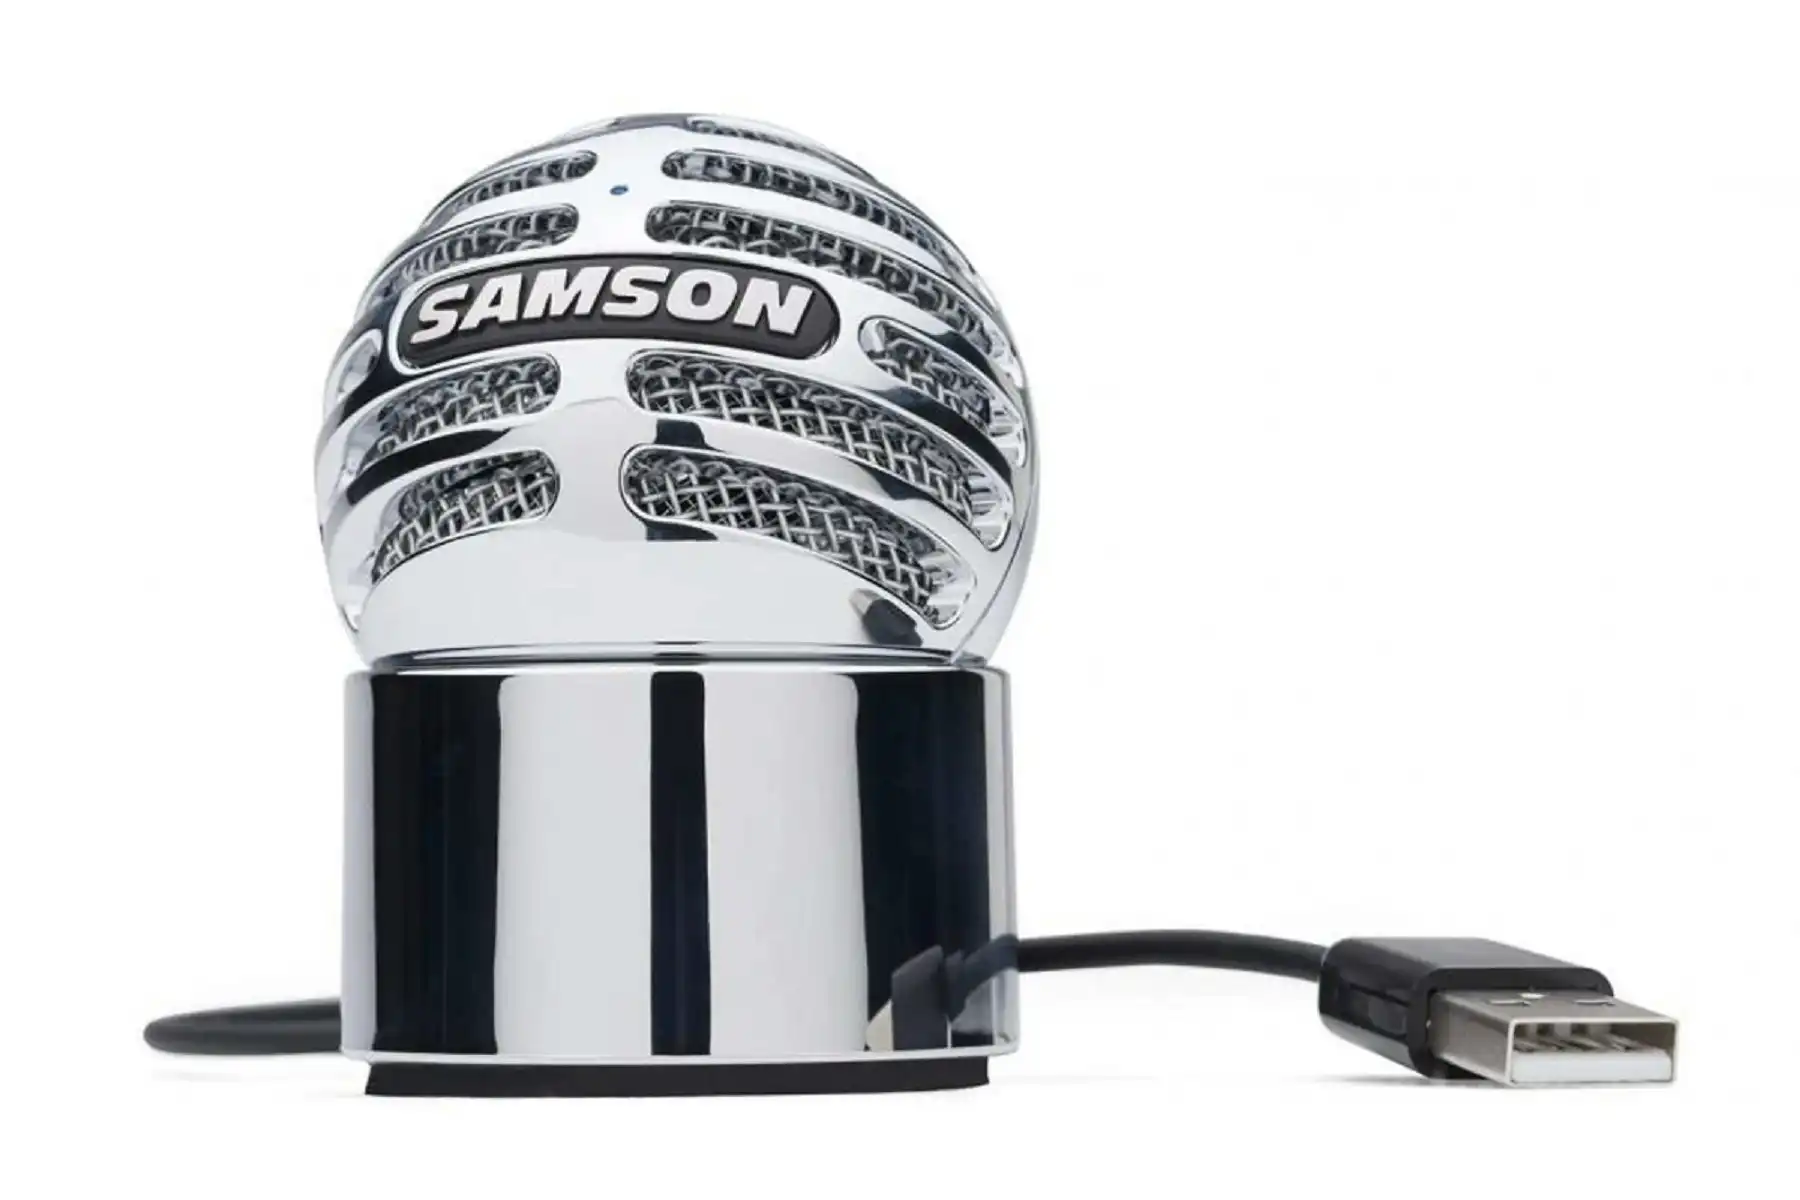 Samson Meteorite Usb Studio Microphone - Silver